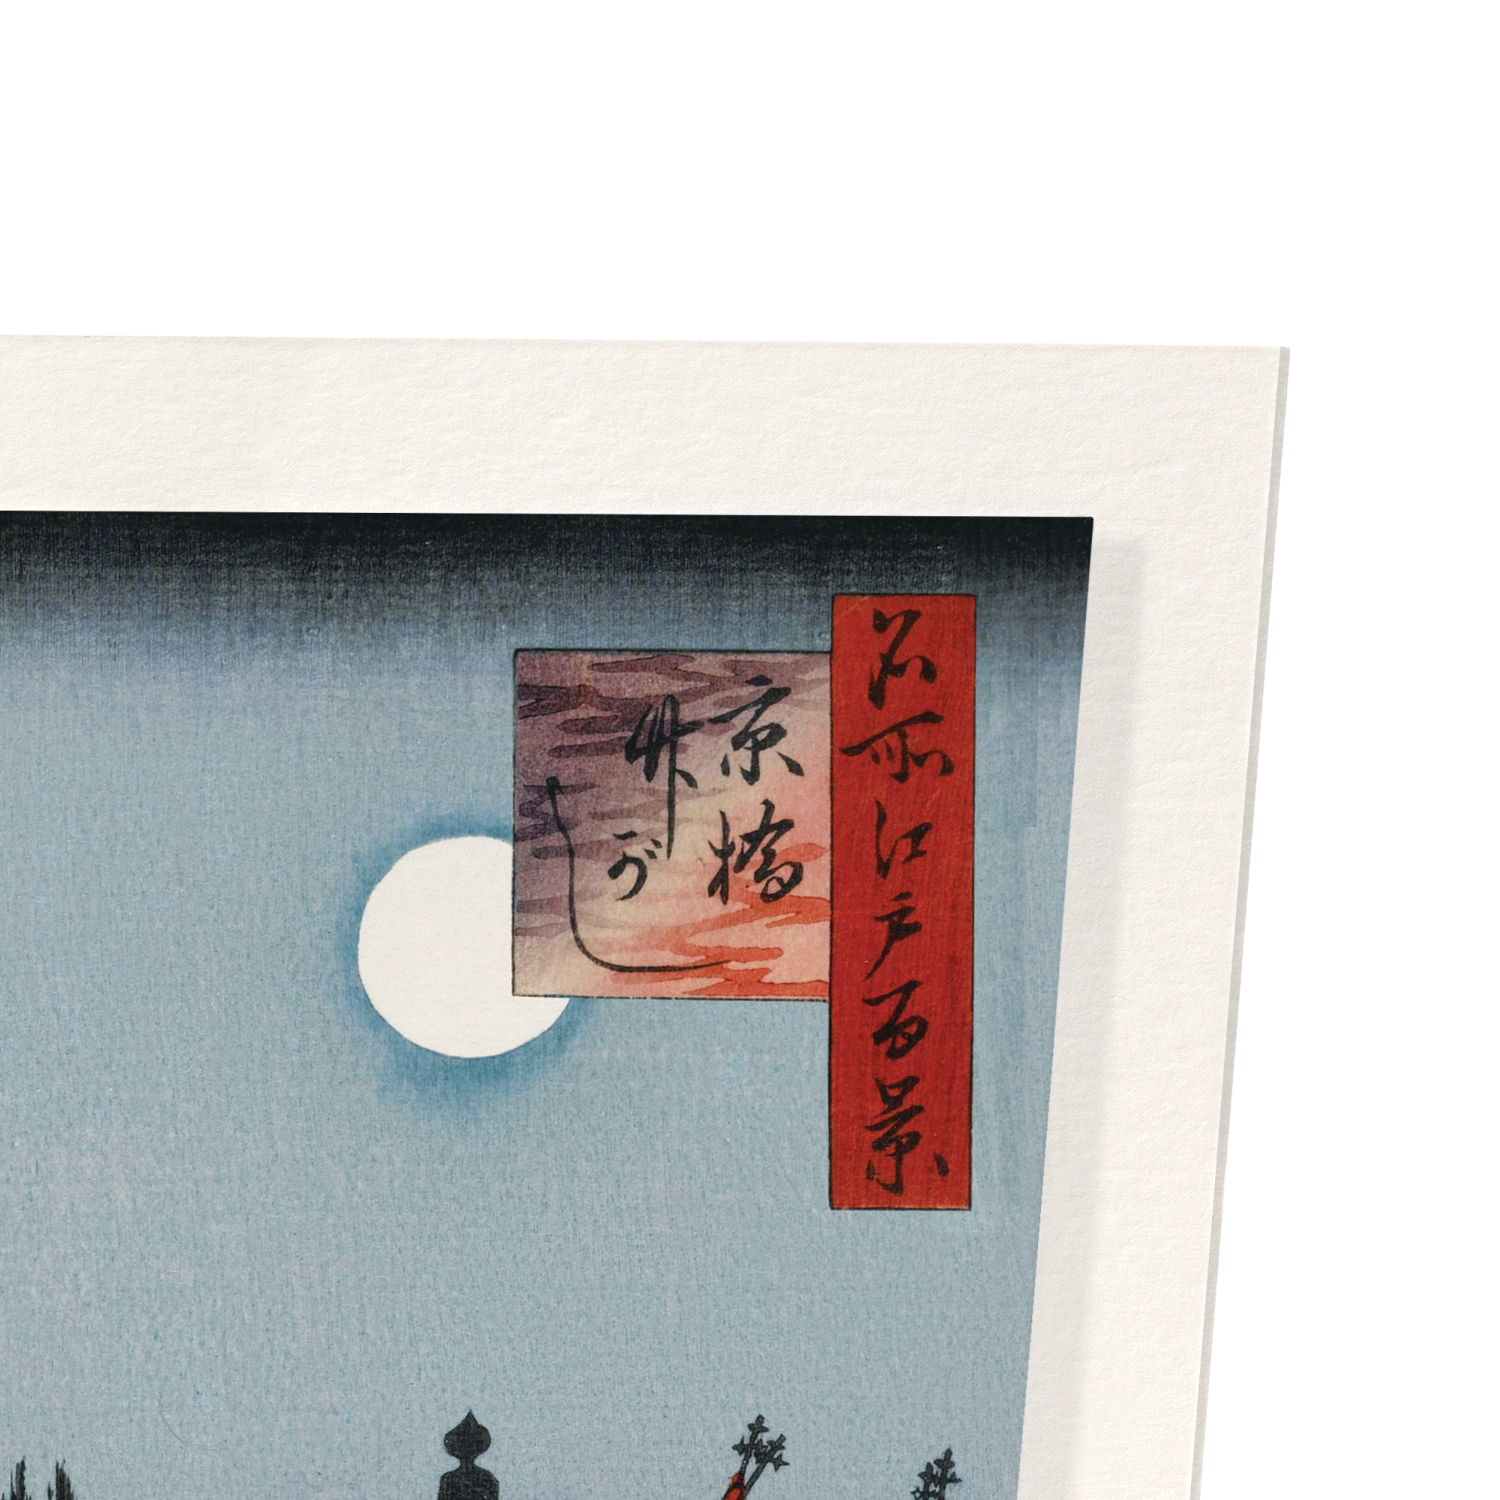 BAMBOO QUAY BY KYOBASHI BRIDGE (1857): Japanese Art Print